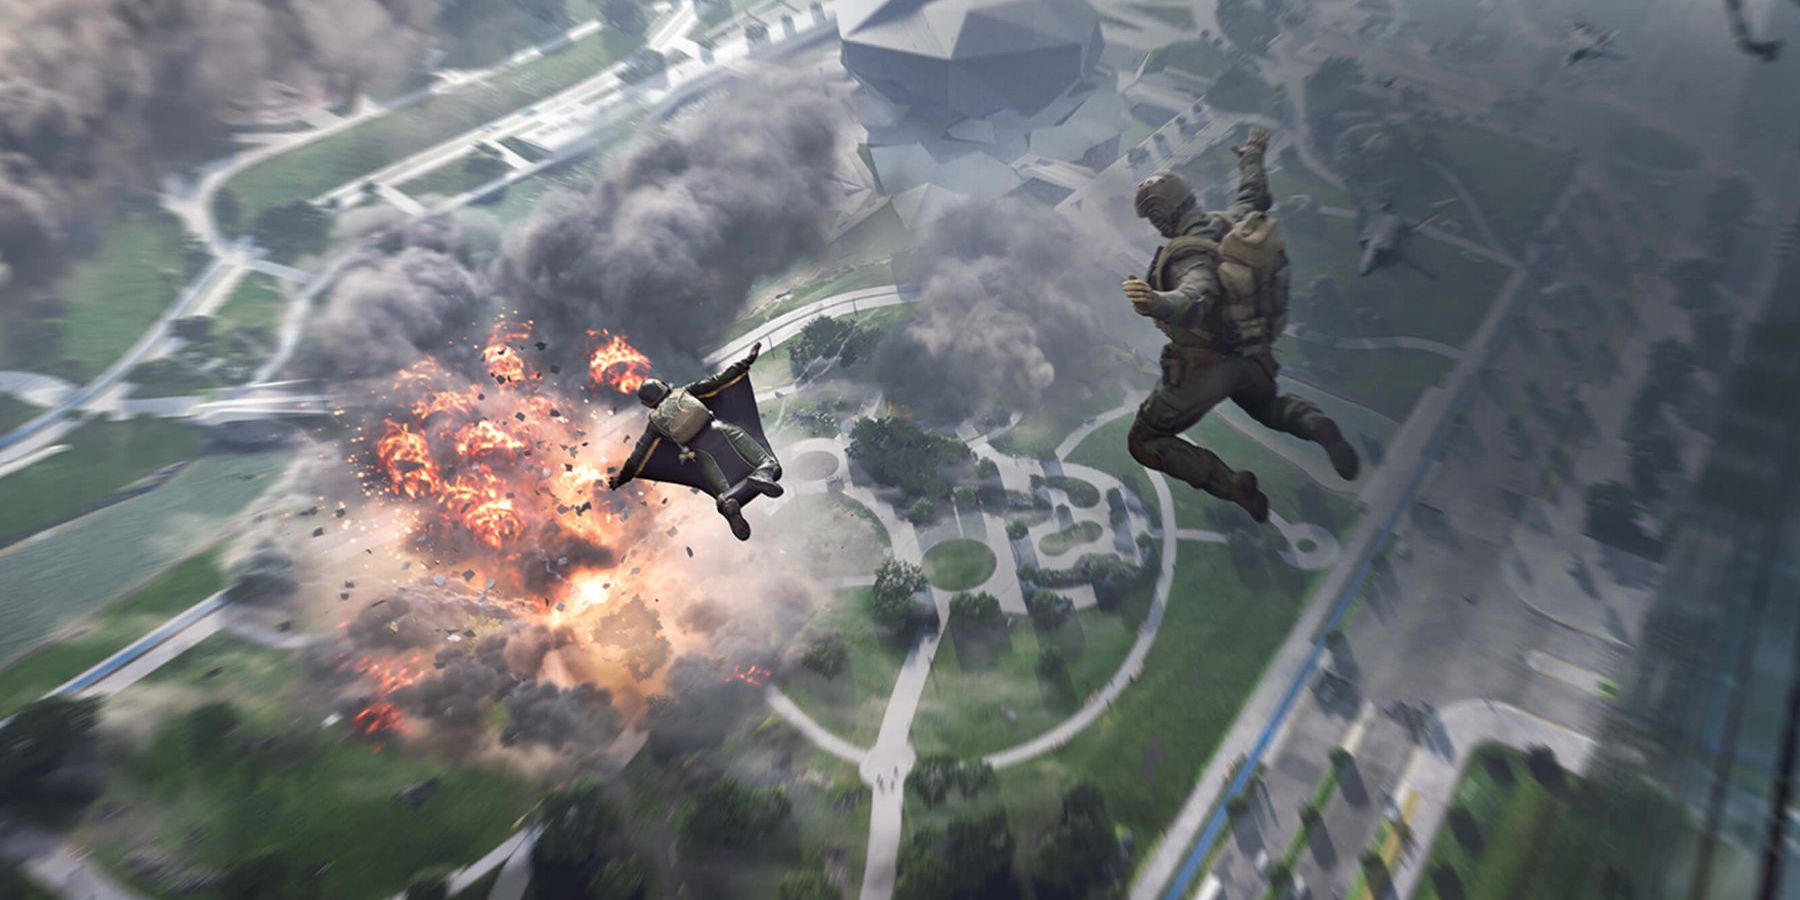 Battlefield 2042's Specialists make discerning each team difficult